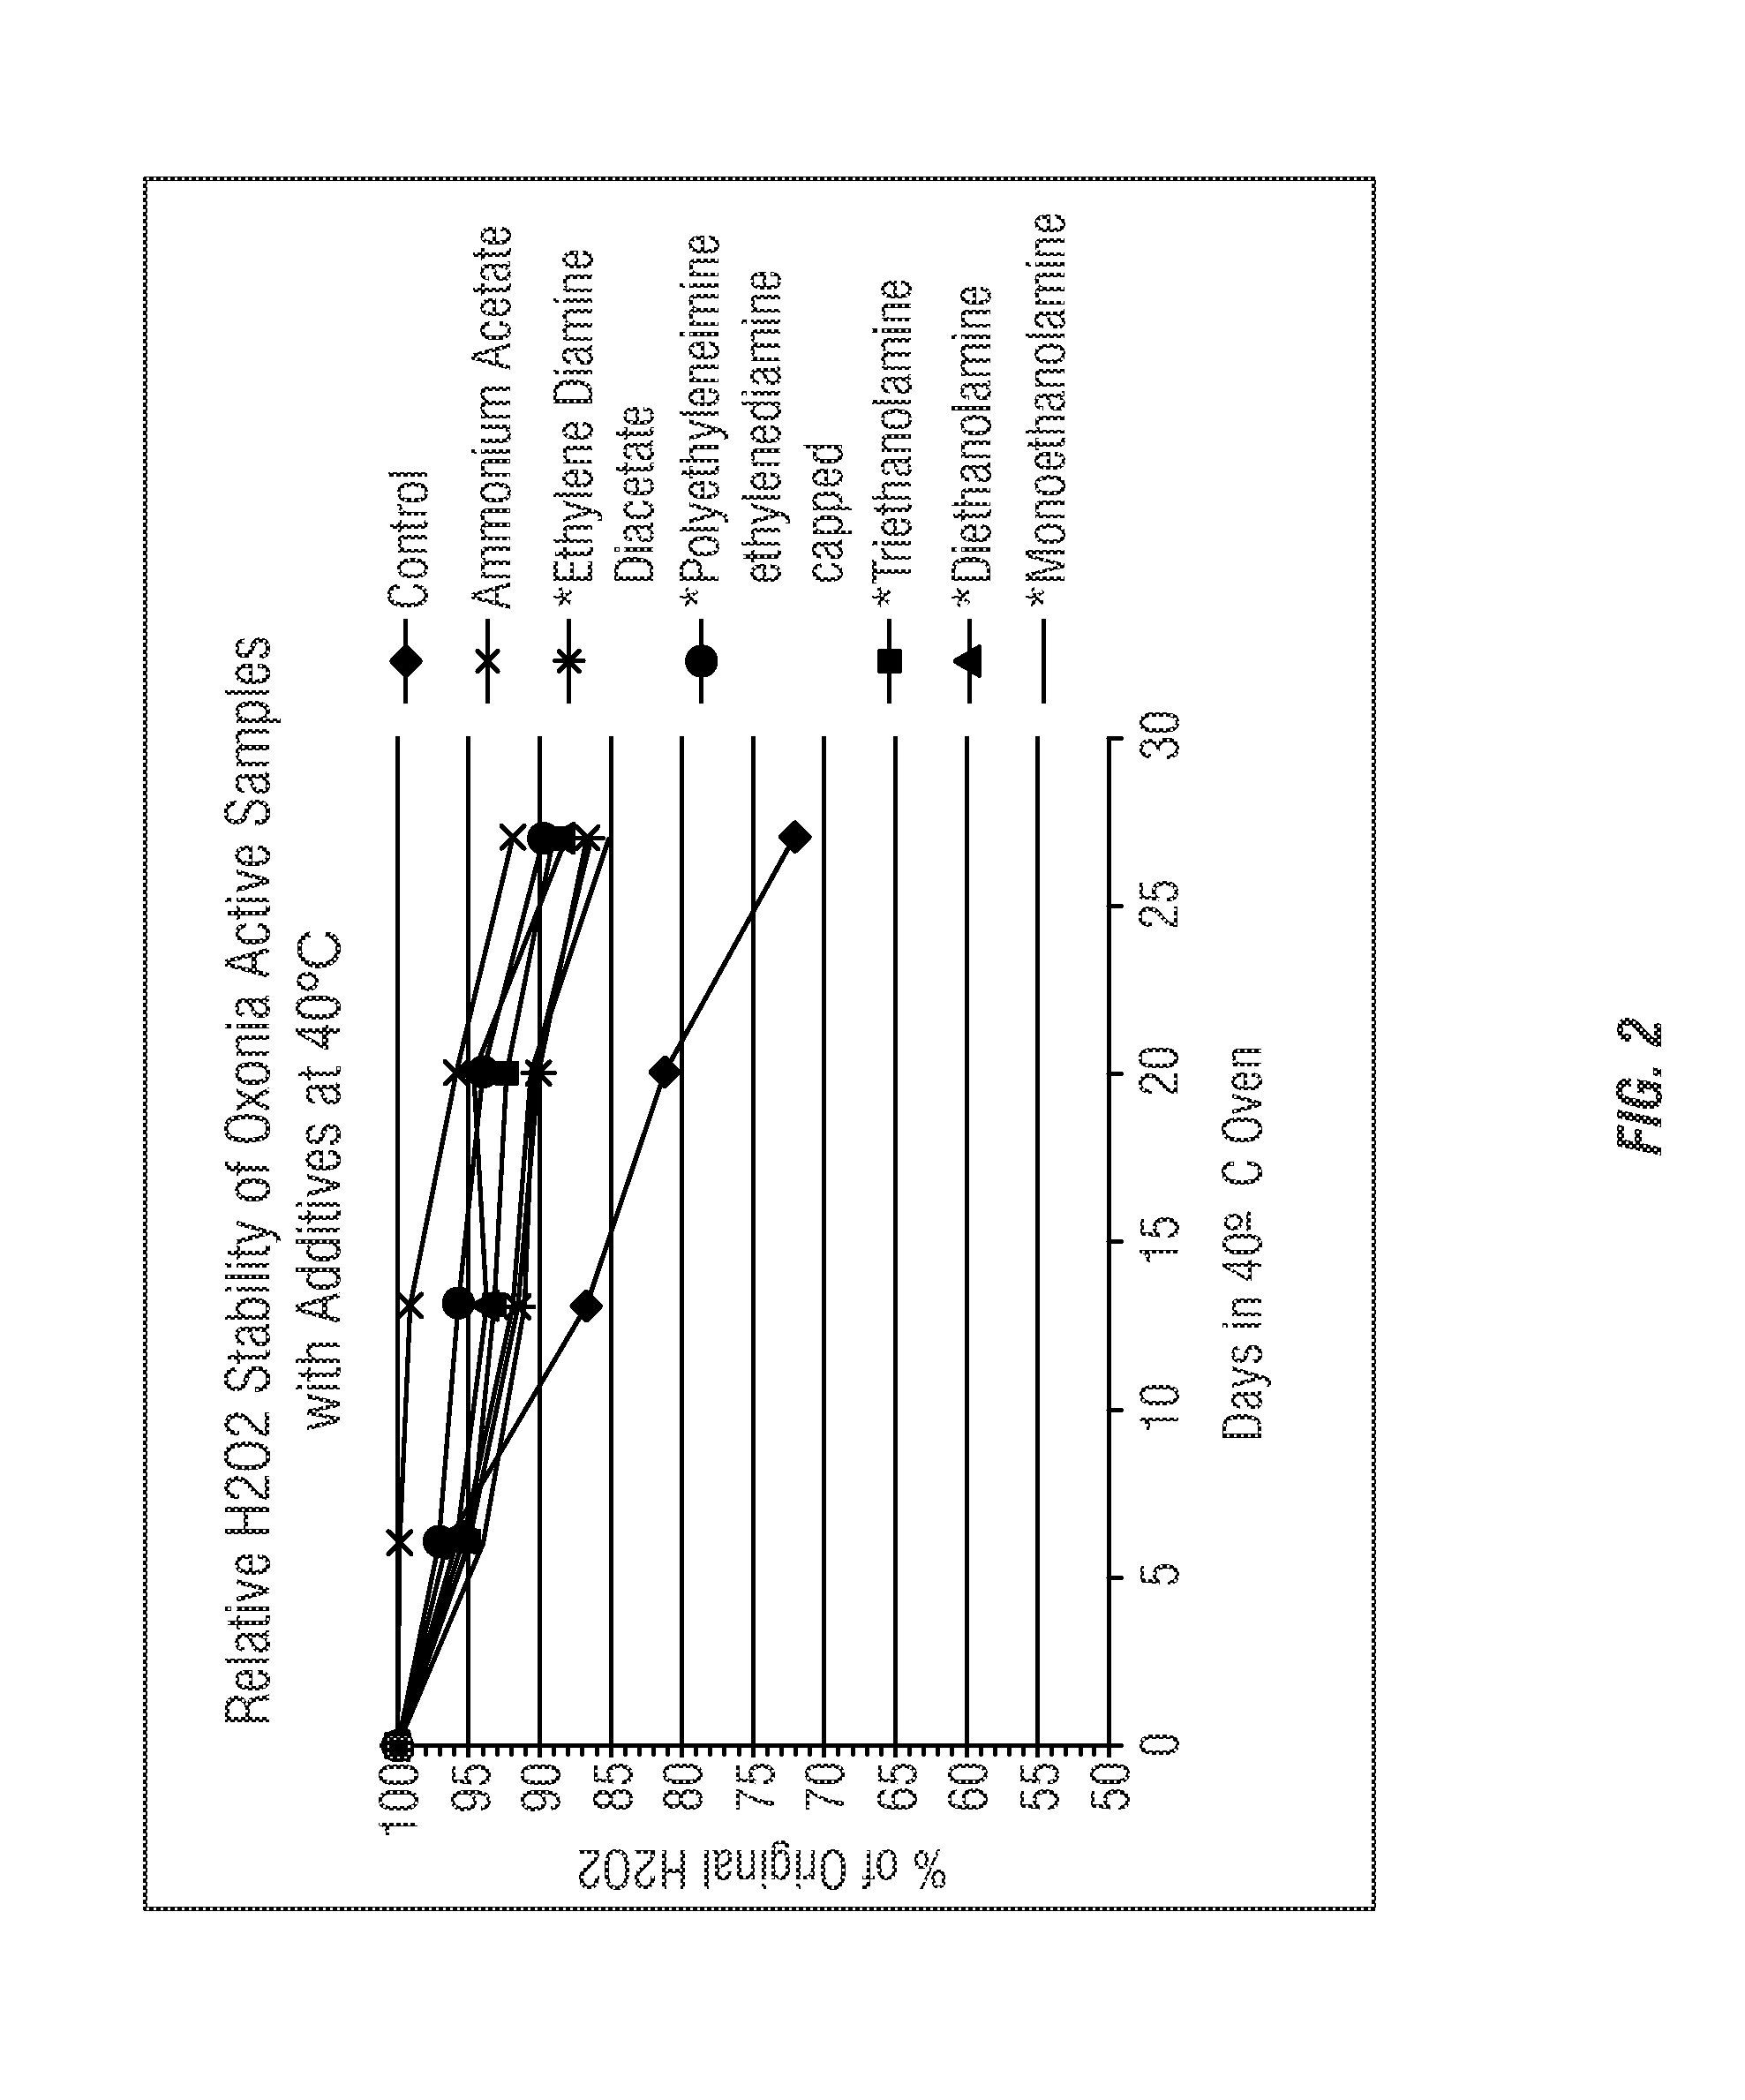 Stabilization of peroxycarboxylic acids using amine acid salts